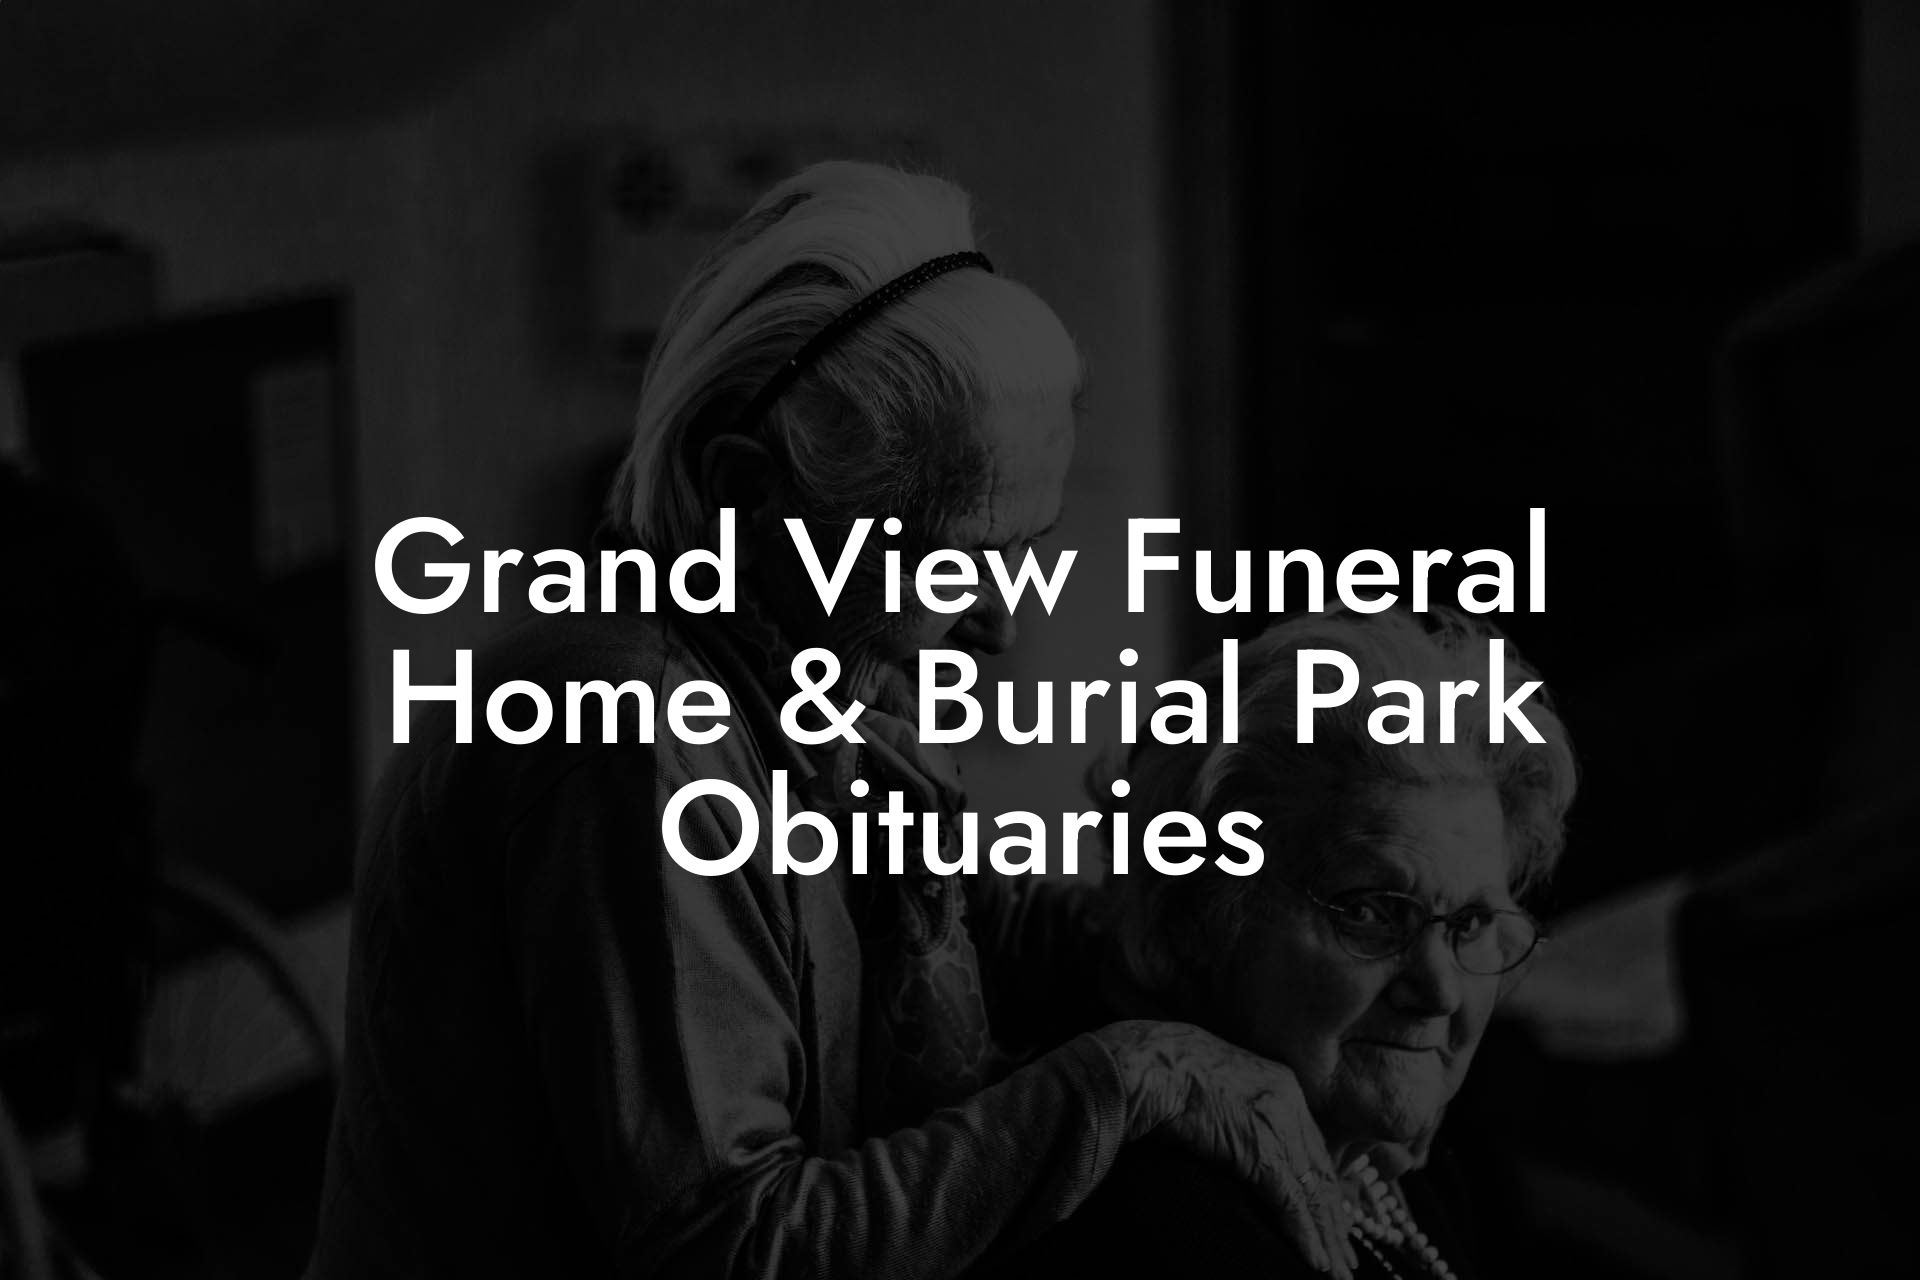 Grand View Funeral Home & Burial Park Obituaries